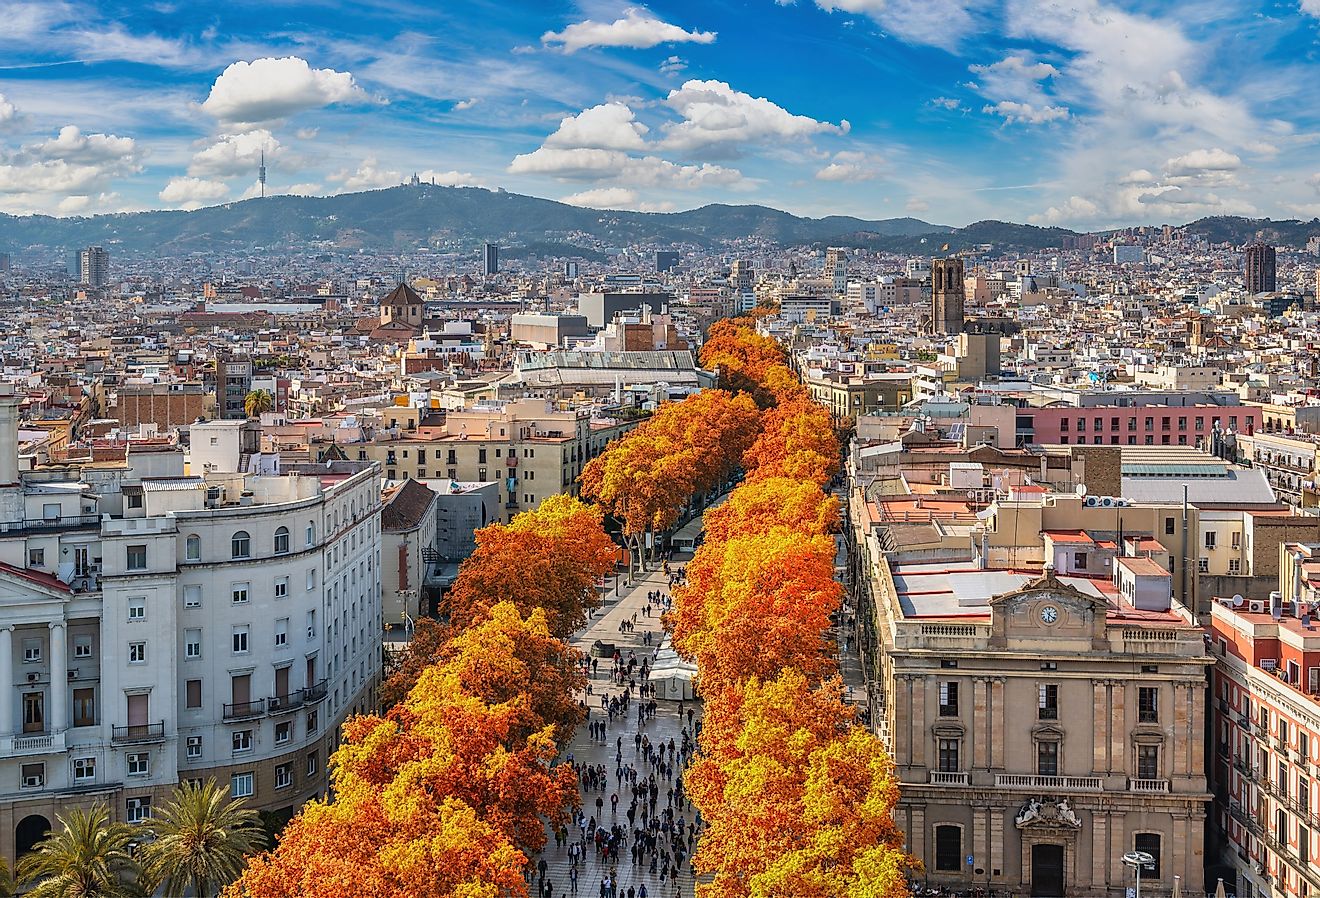 La Rambla, Barcelona, Spain. Image credit: Noppasin Wongchum via Shutterstock